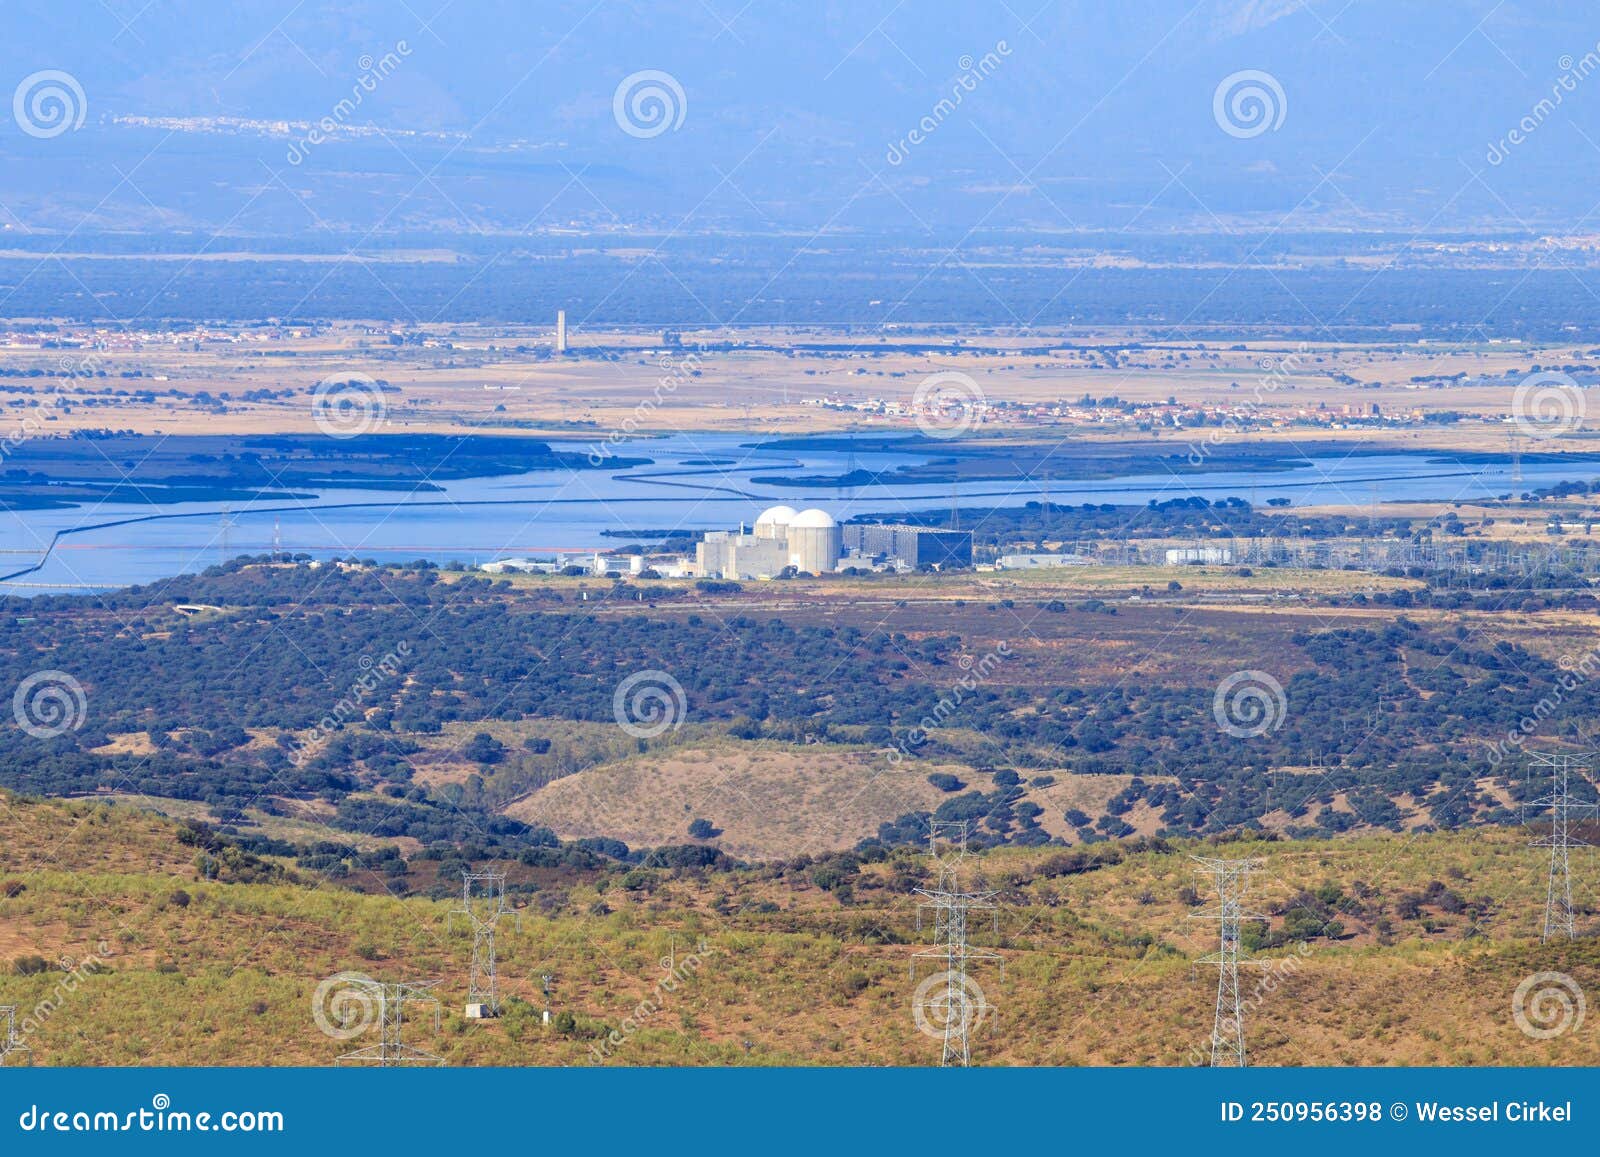 central nuclear de almaraz and arrocampo reservoir, spain